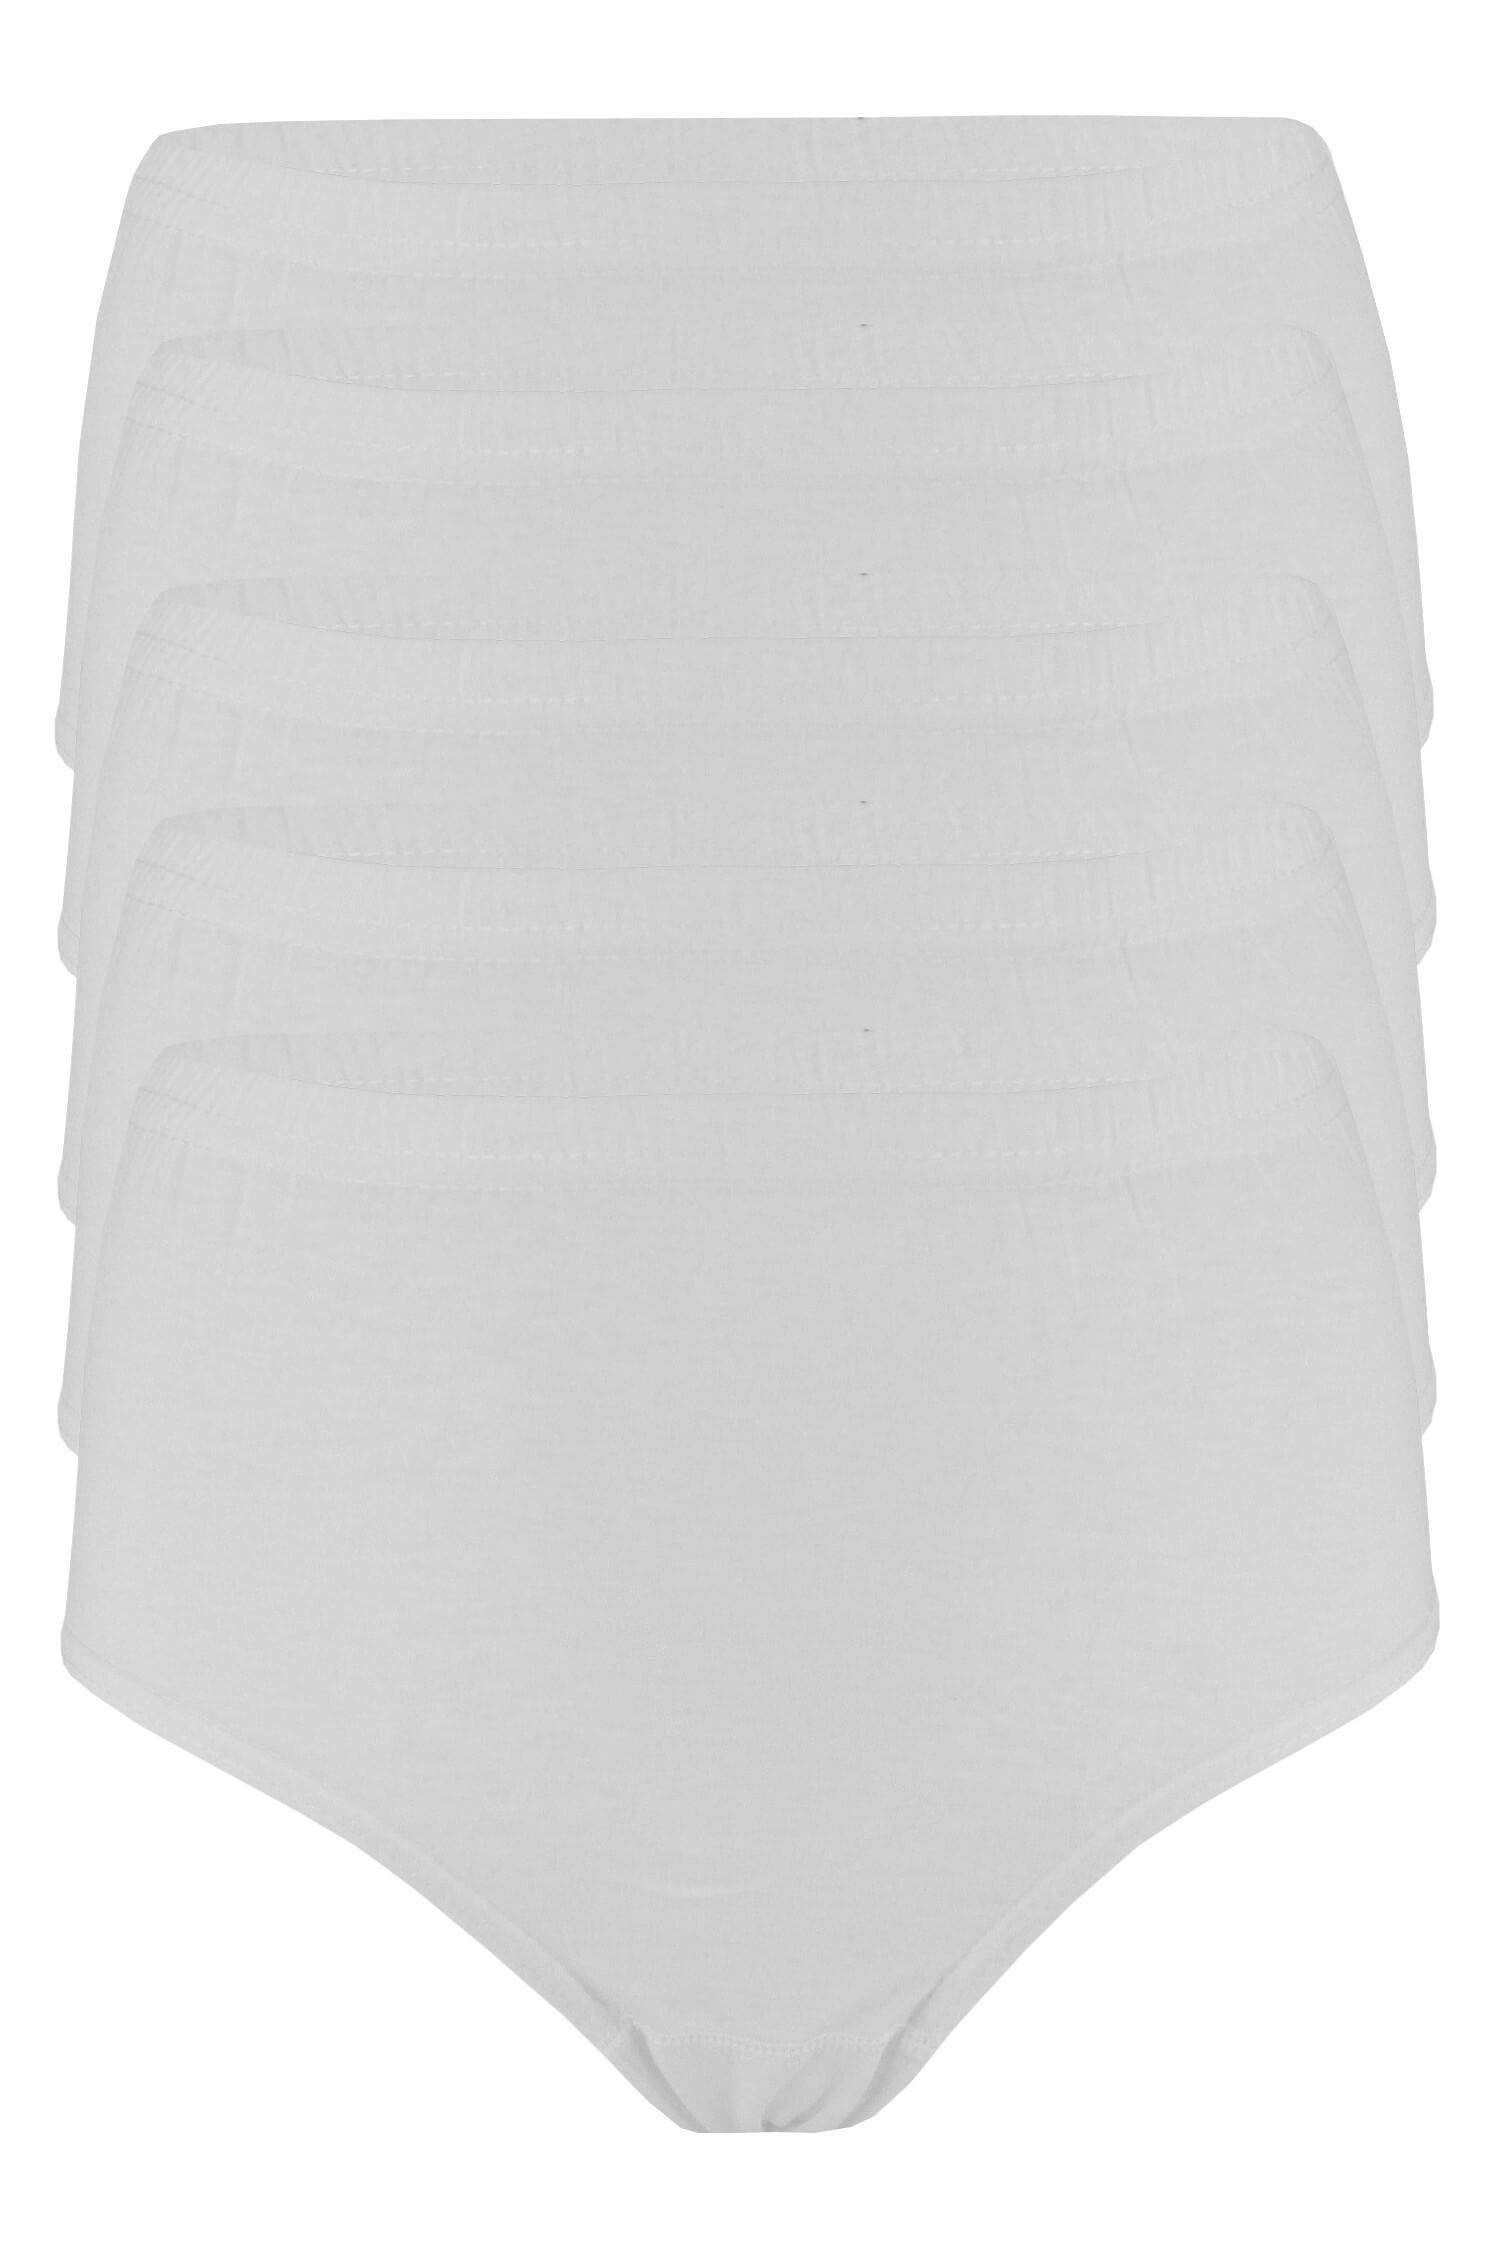 Daneta vyšší bavlněné kalhotky B5-5bal L bílá